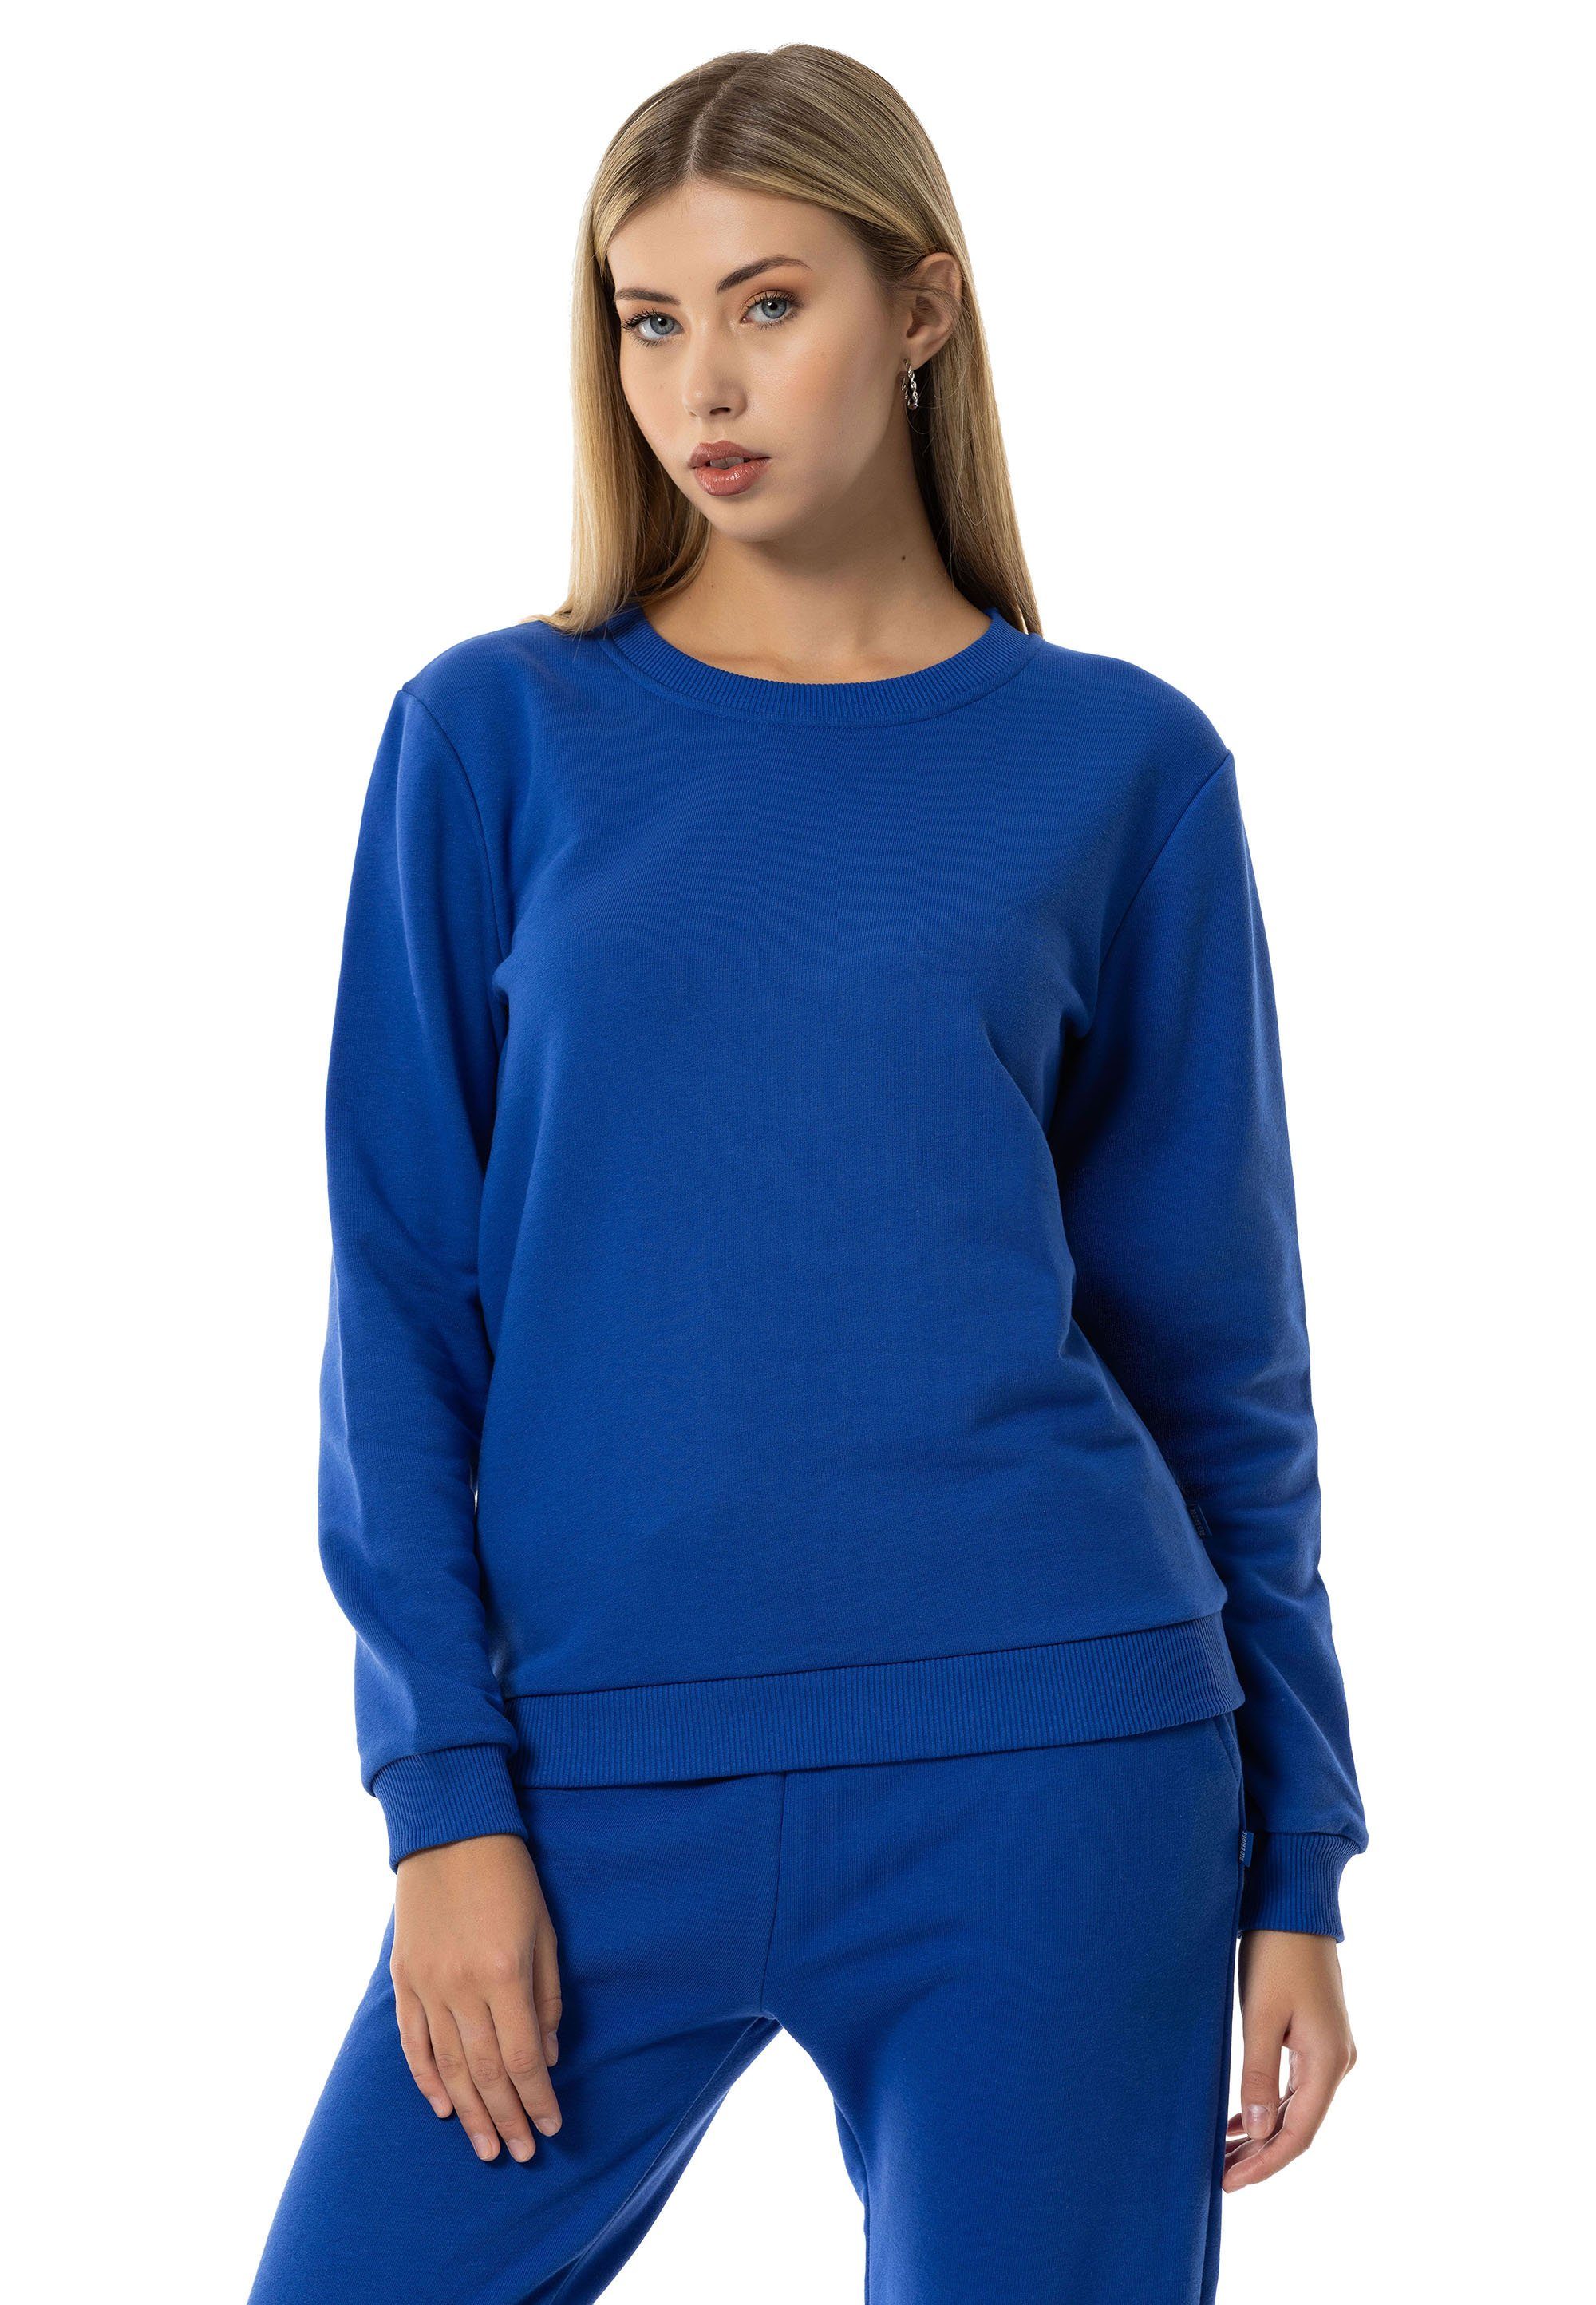 Rundhals Sweatshirt Saxeblau Premium RedBridge Pullover Qualität